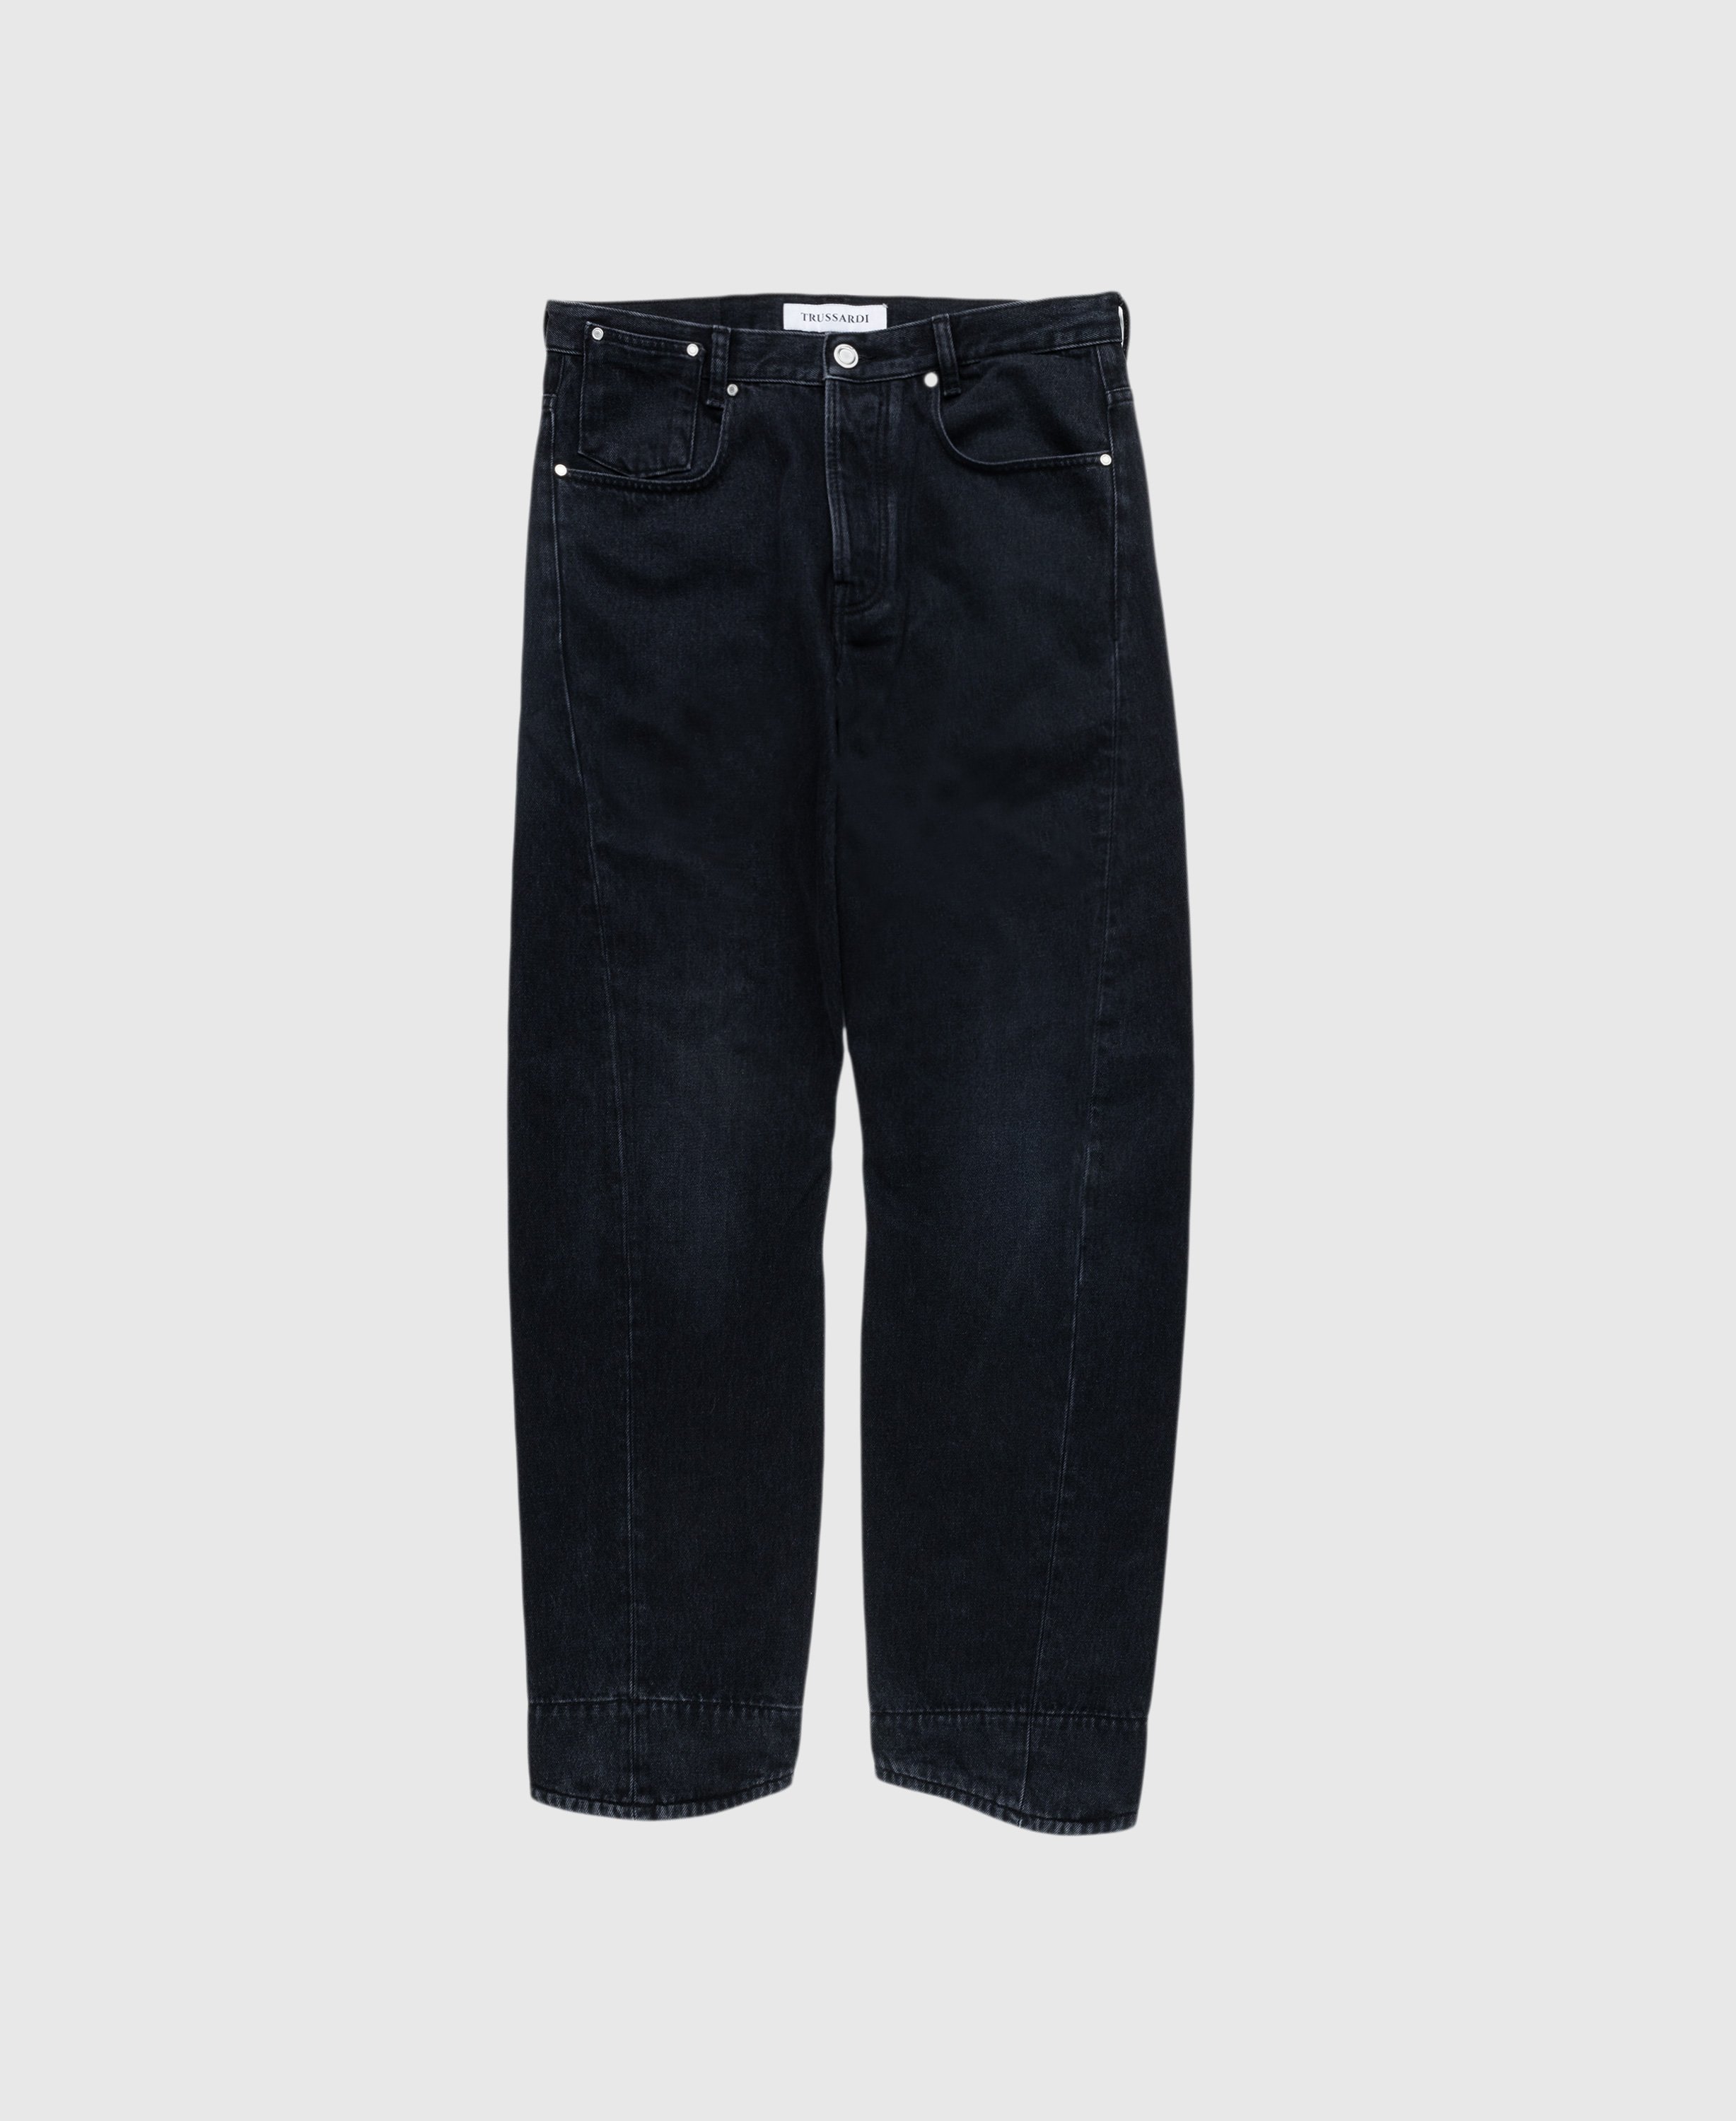 Trussardi - Five-Pocket Twisted Tapered Jeans Black Rigid - Clothing - Black - Image 1